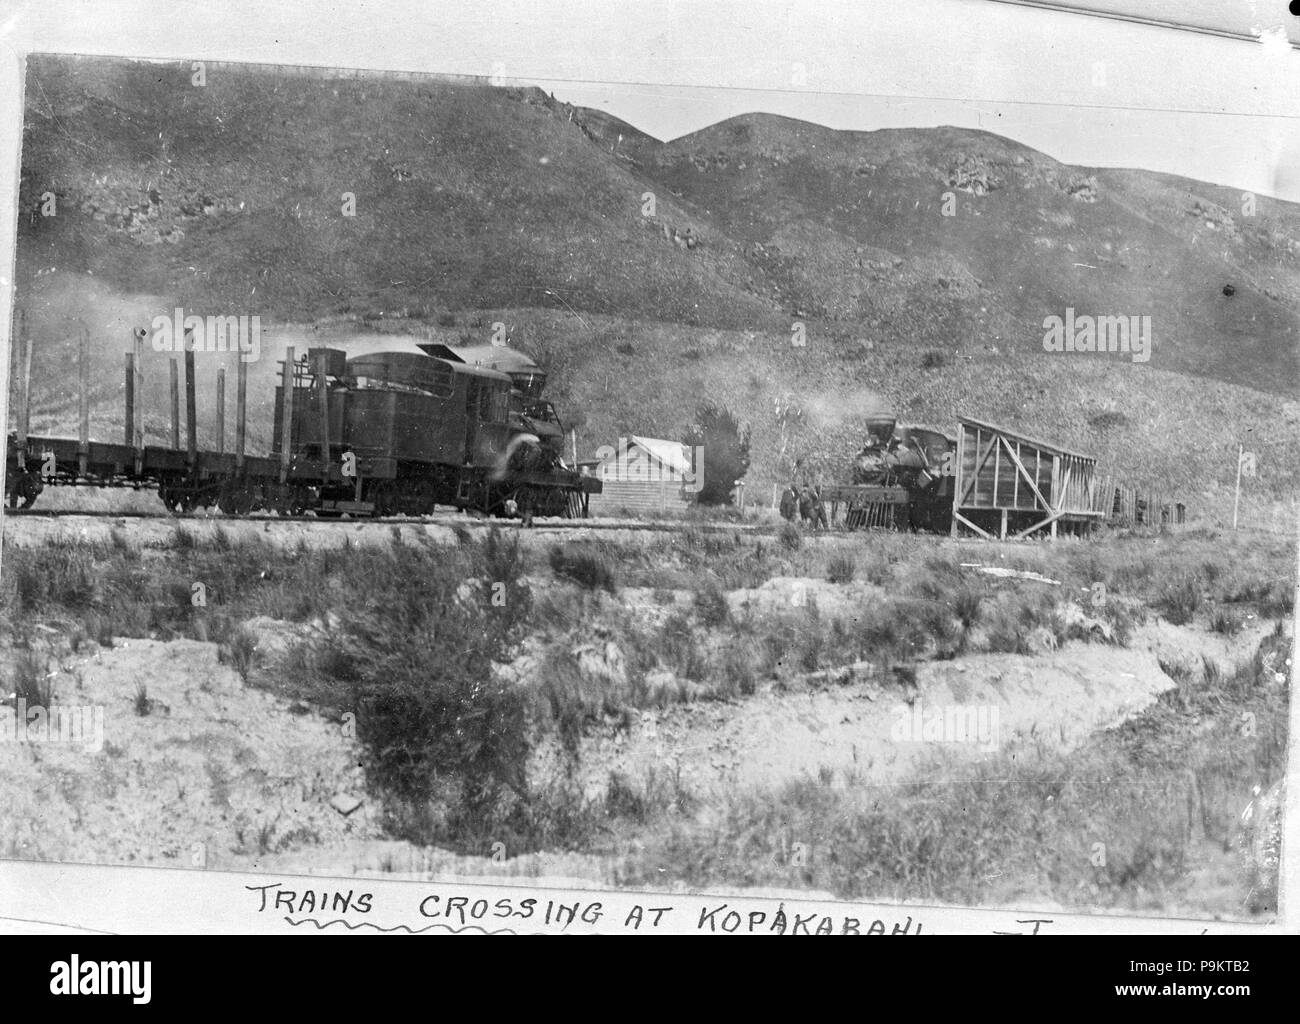 308 Taupo Totara Timber Company trains crossing at Kopakorahi ATLIB 335746 Stock Photo